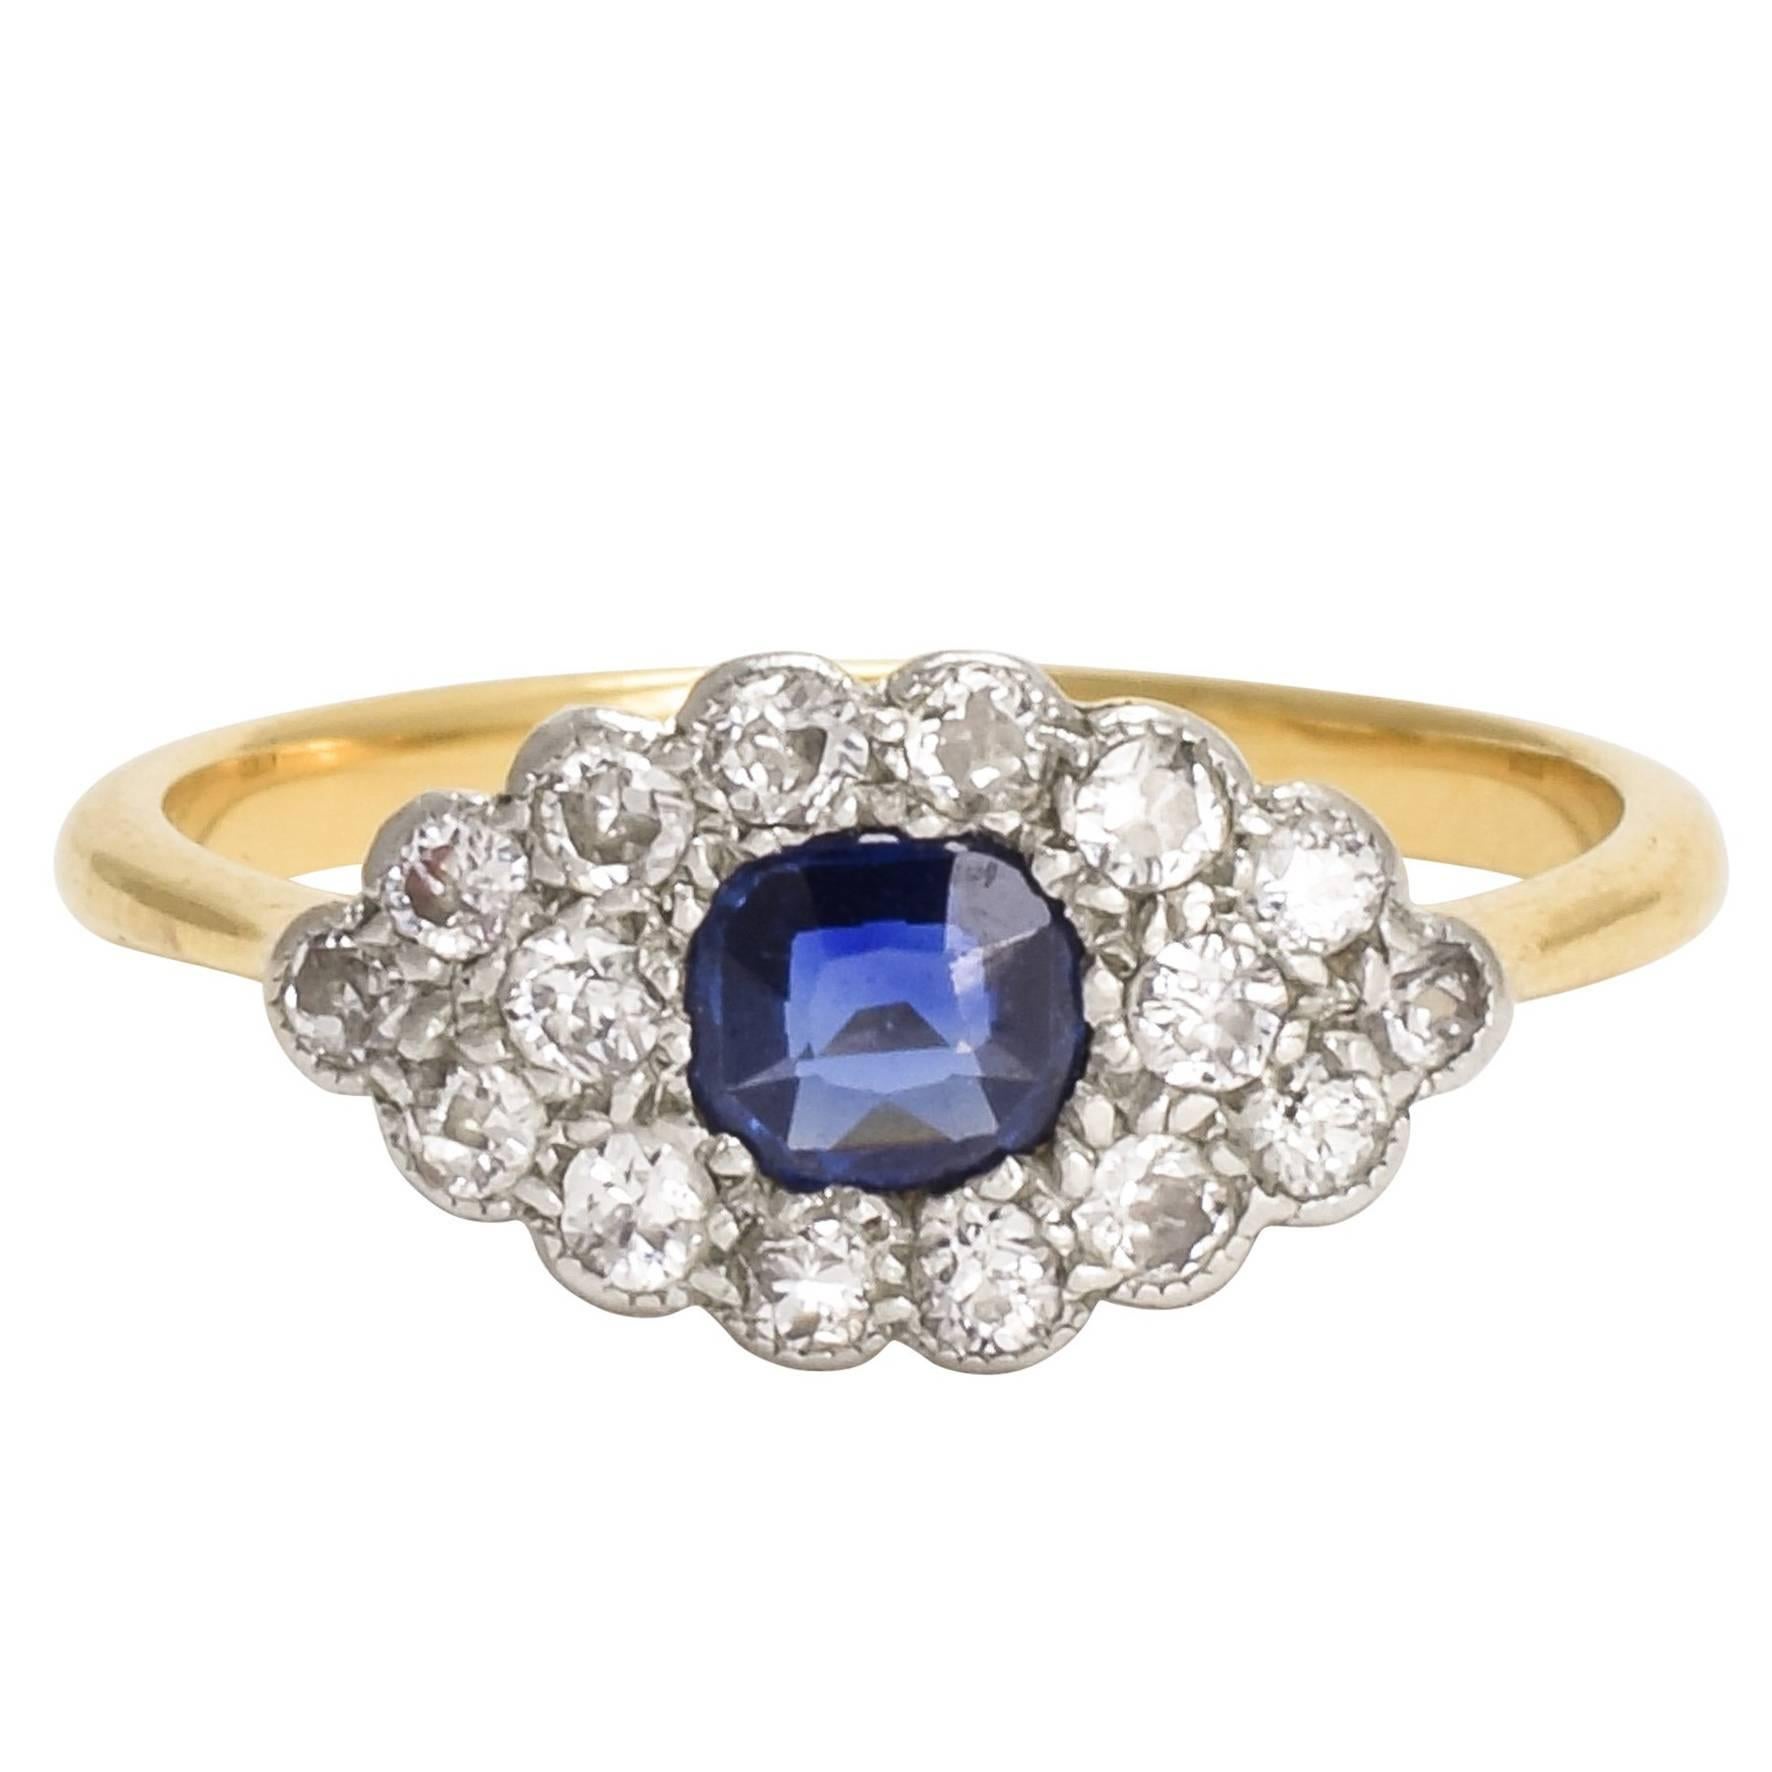 Antique Edwardian Sapphire Diamond "Blue Eye" Ring